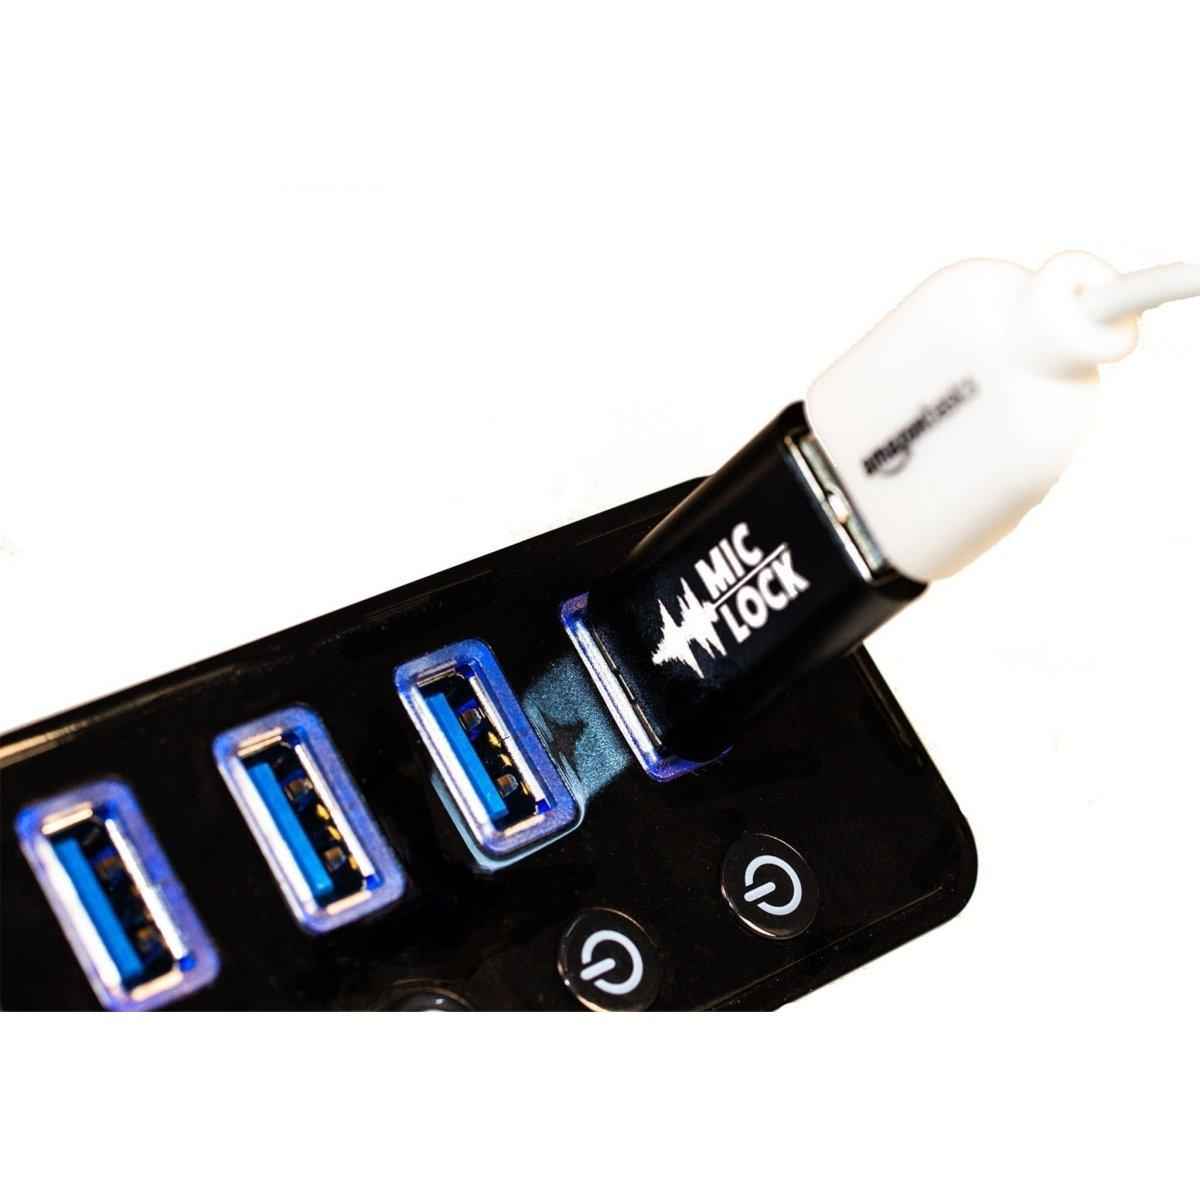 Mic-Lock USB-A to USB-A Secure charger - Black - Mic-Lock